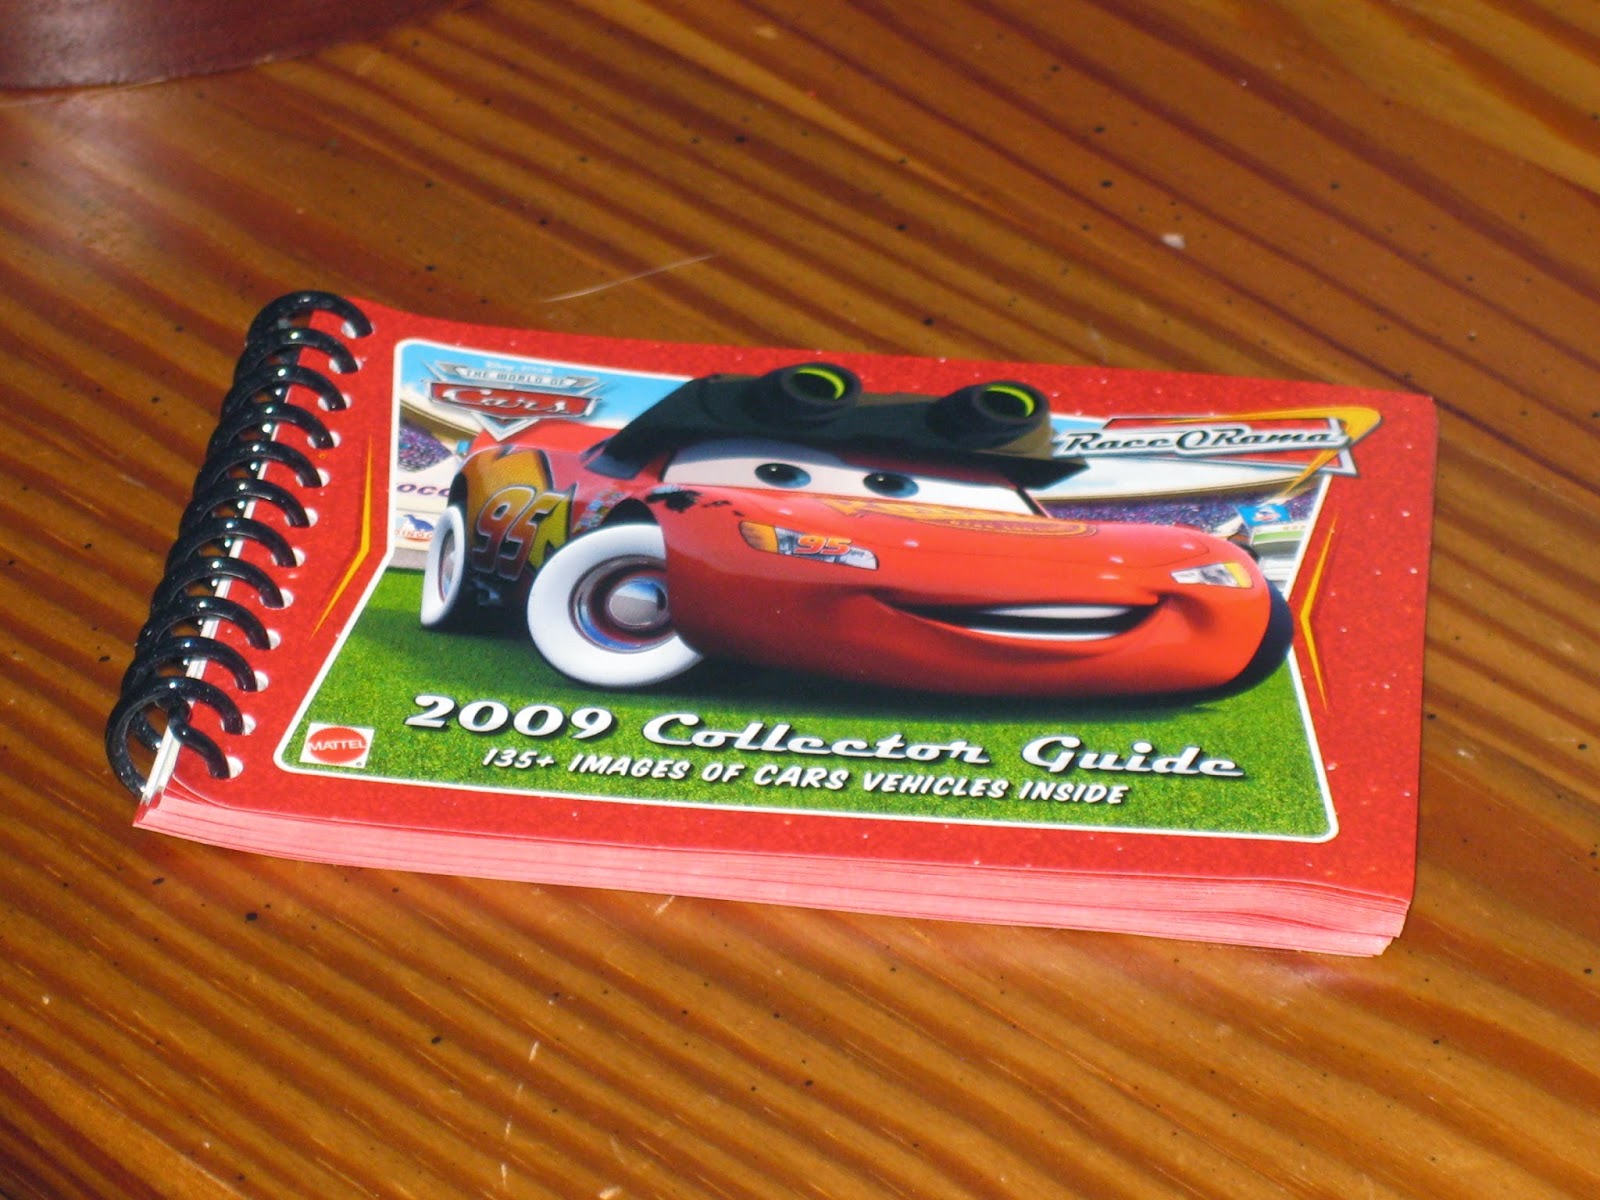 Disney Cars Race-O-Rama Night Vision Lightning McQueen Diecast Car 